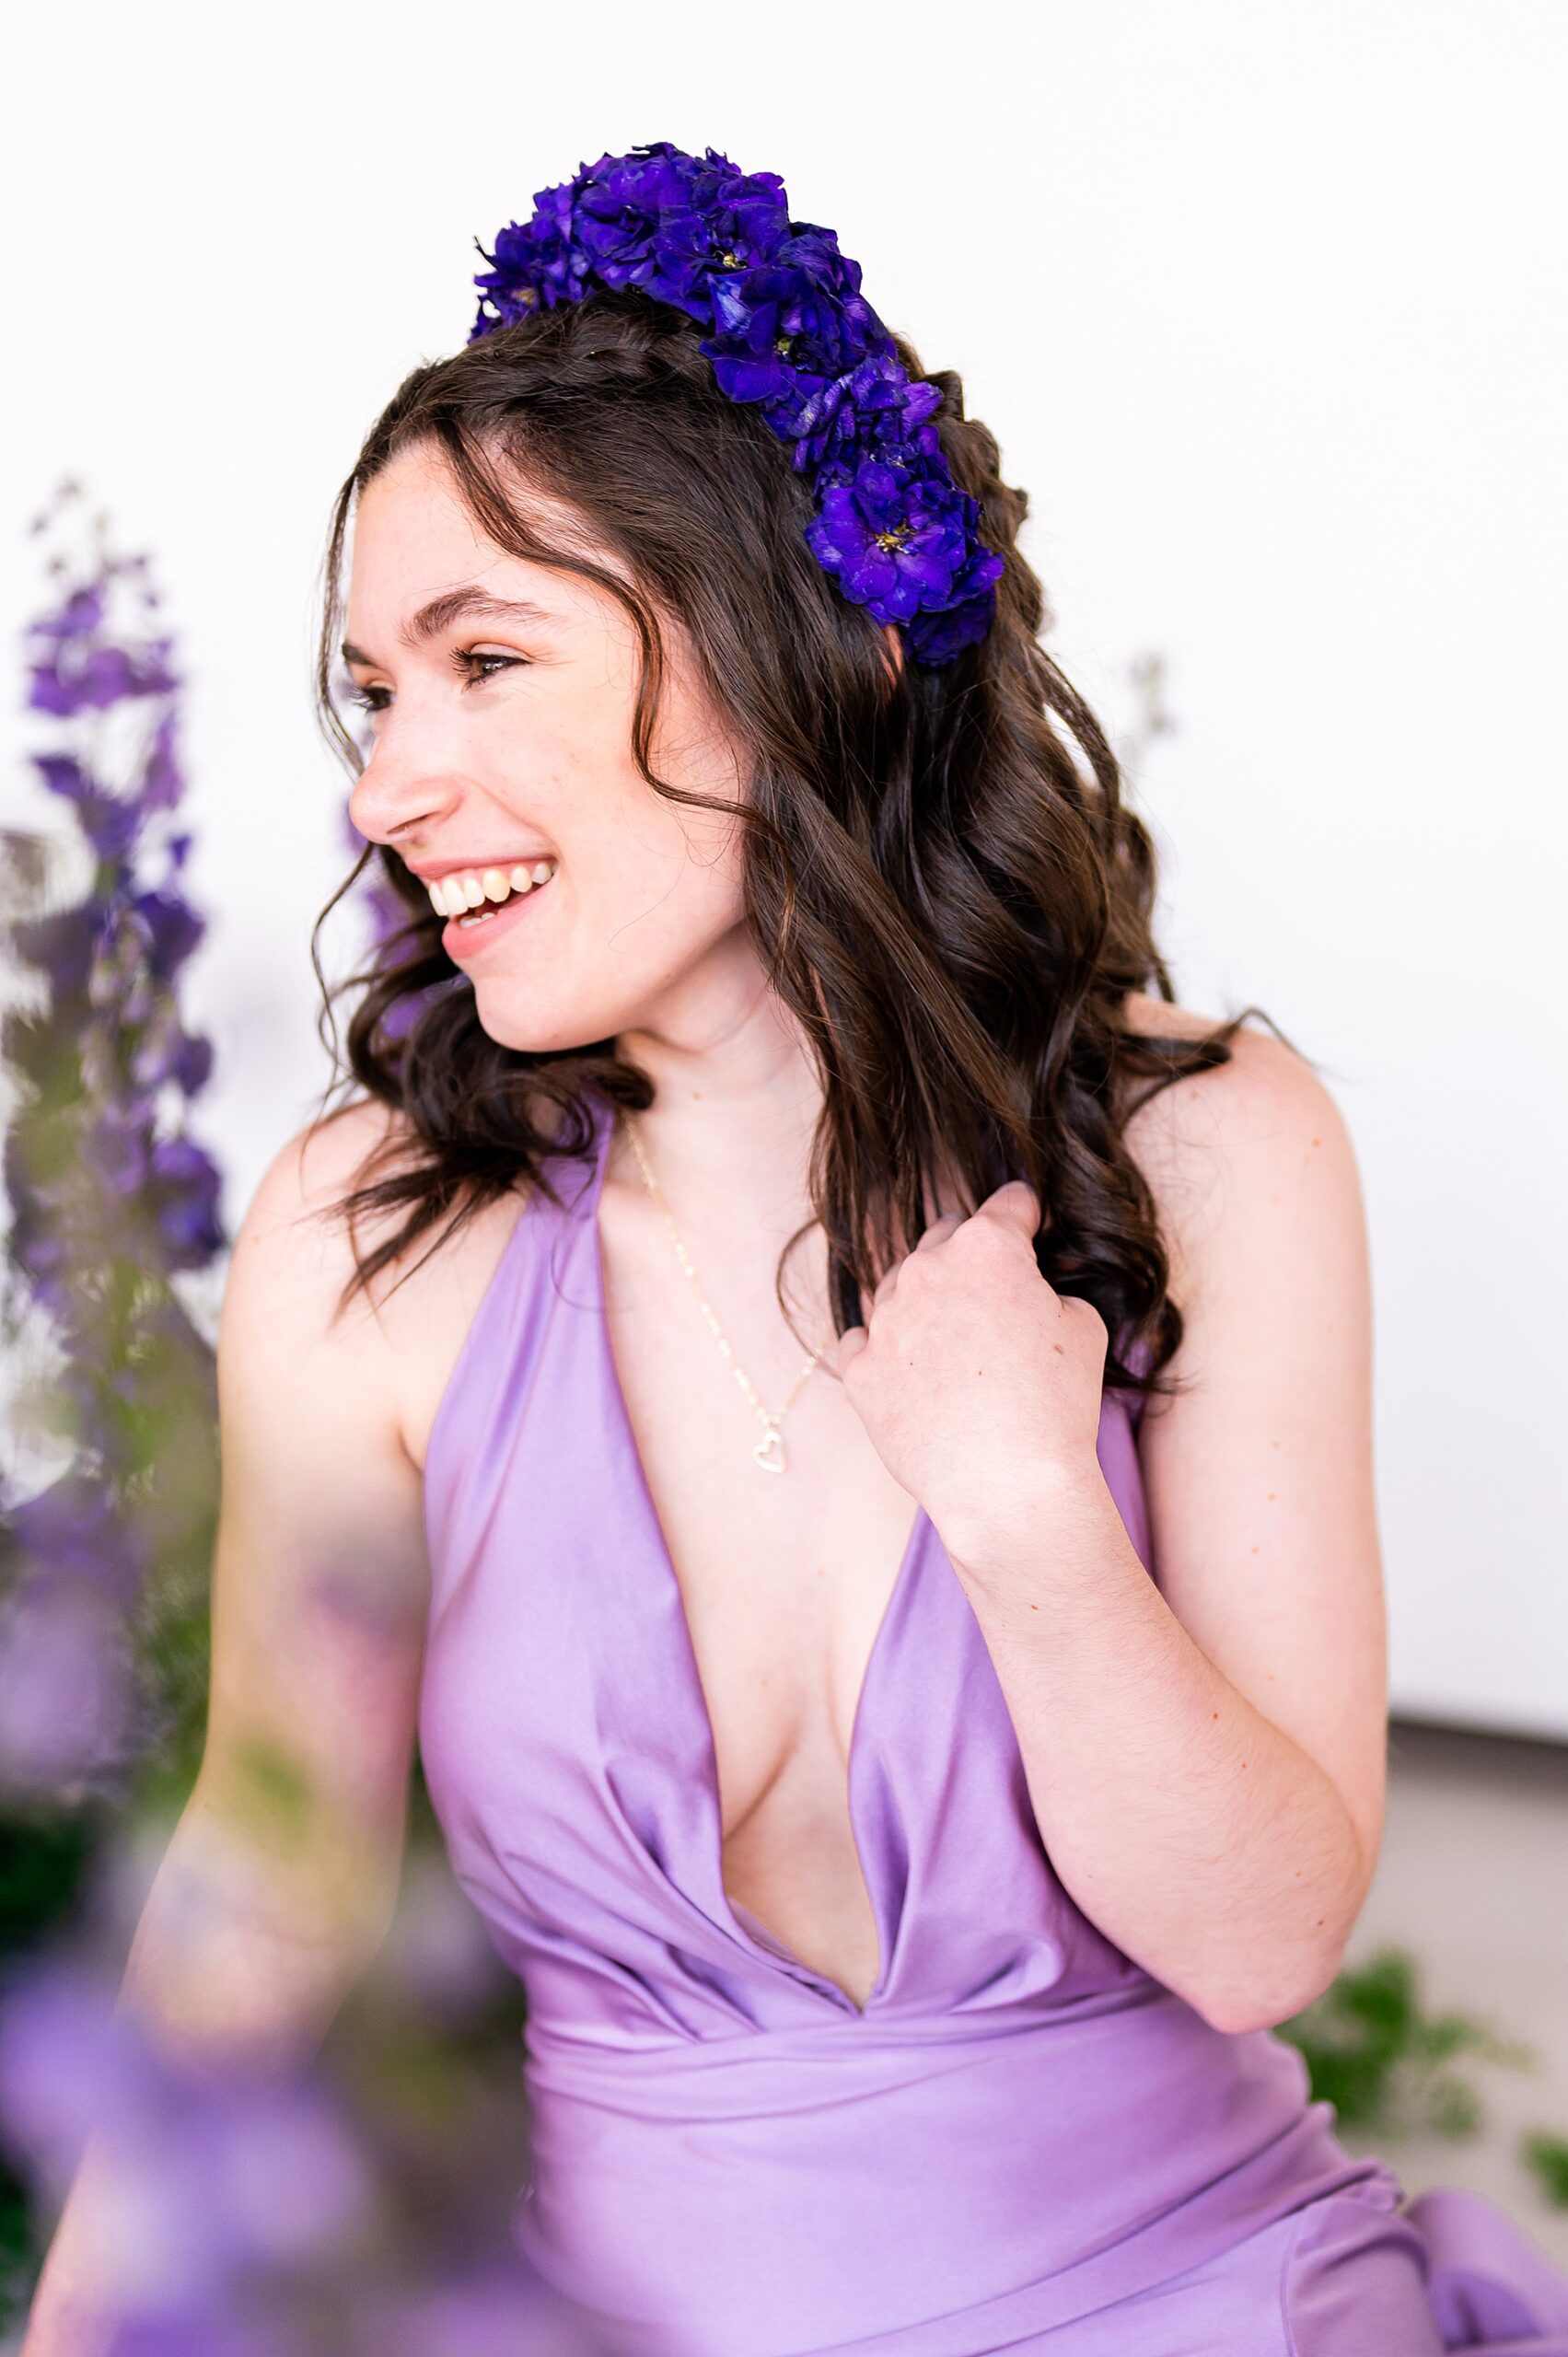 Prom-themed Senior Spokesmodel Photoshoot at The Social HQ